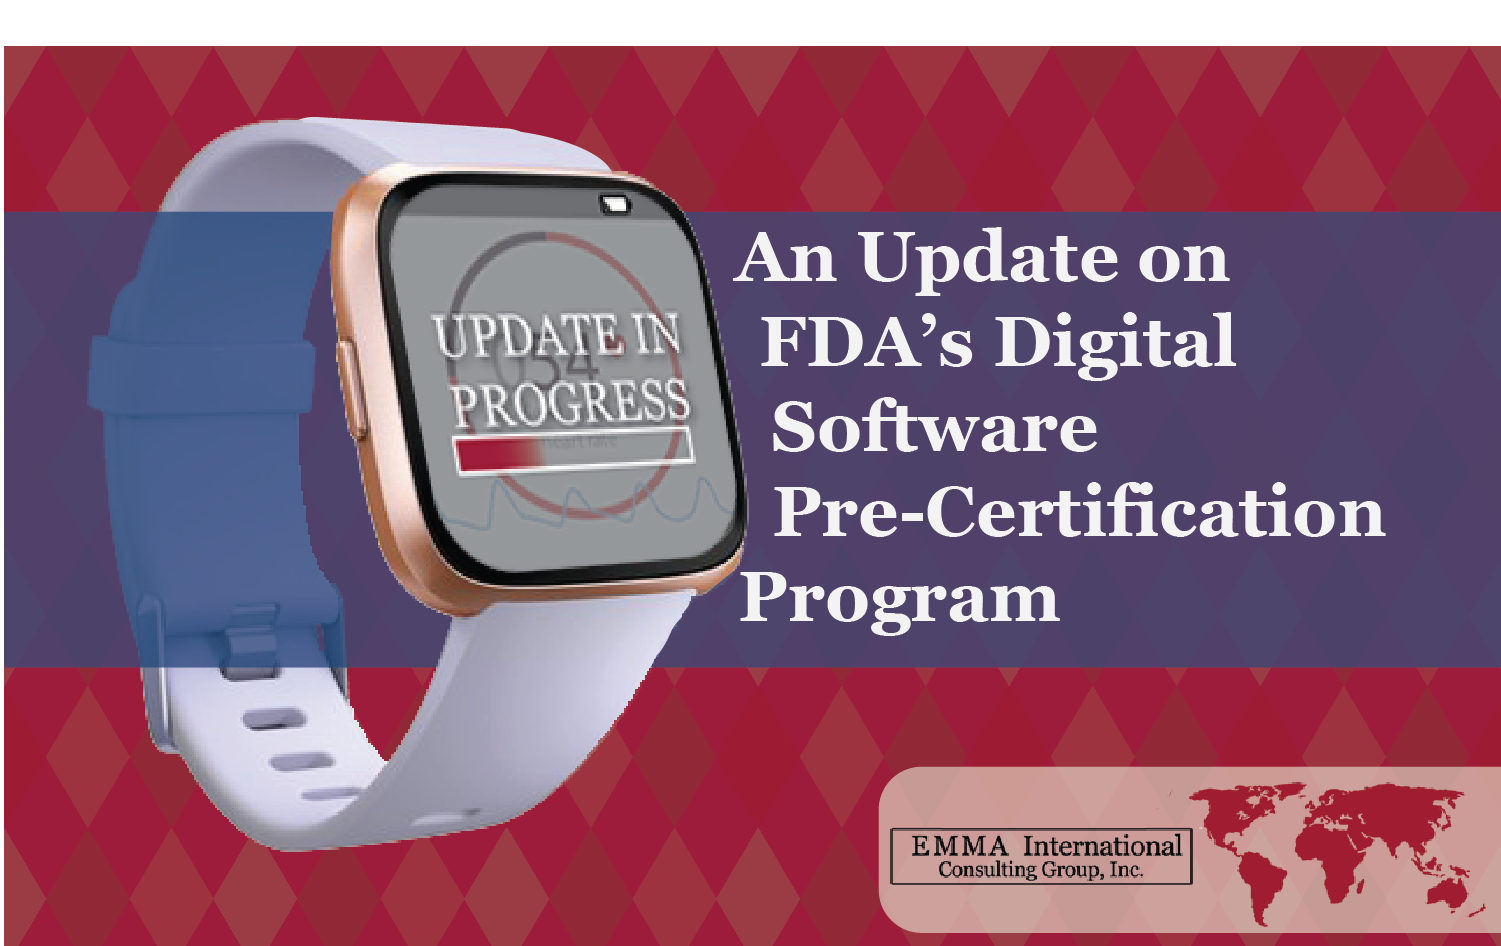 An Update on FDA’s Digital Software Pre-Certification Program